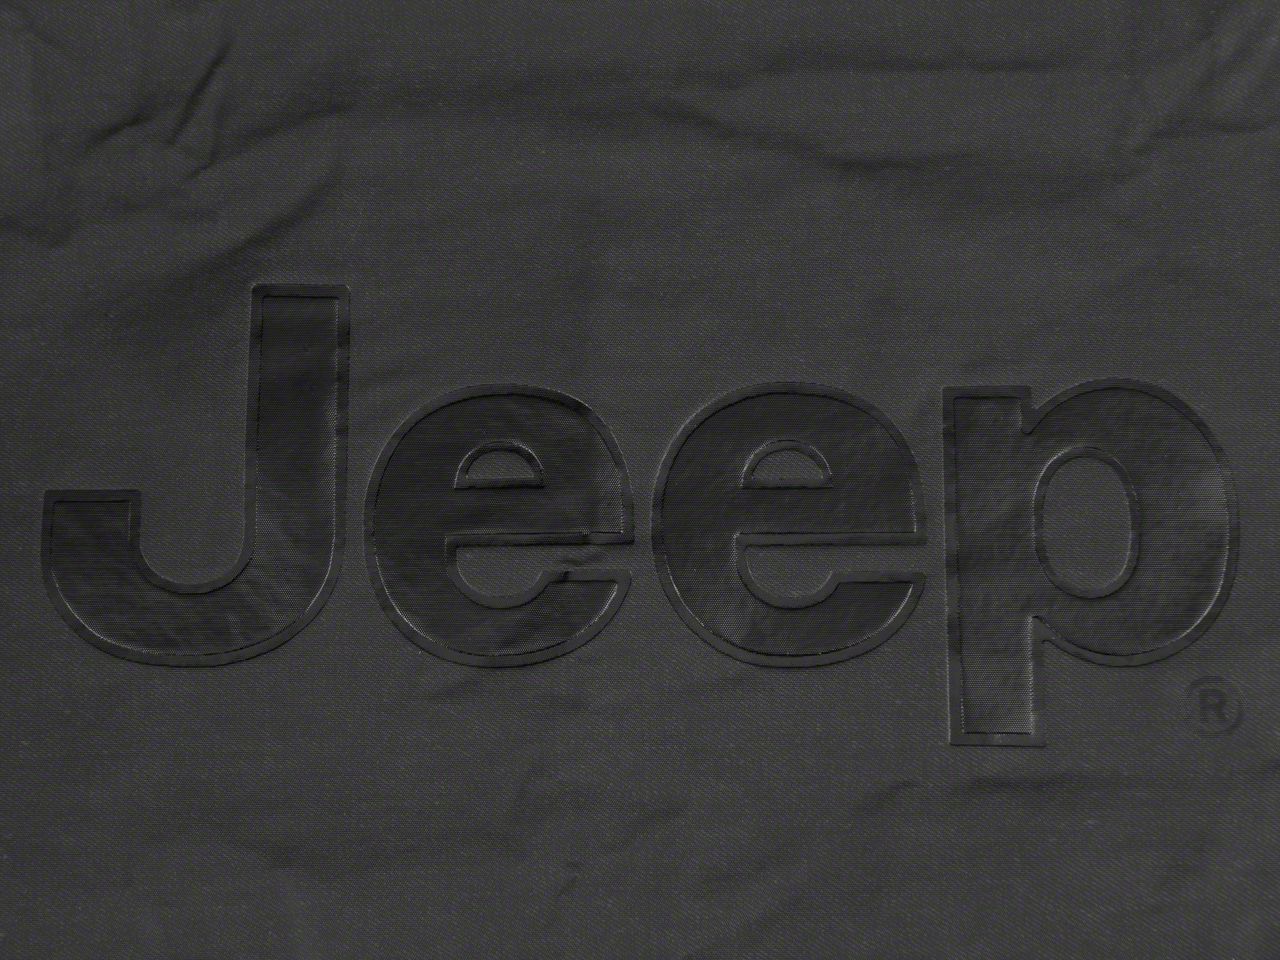 Mopar Jeep Wrangler Jeep Logo Spare Tire Cover; Black Denim; 30 to 31-Inch  Tire Cover 82209949AB (07-23 Jeep Wrangler JK  JL) Free Shipping